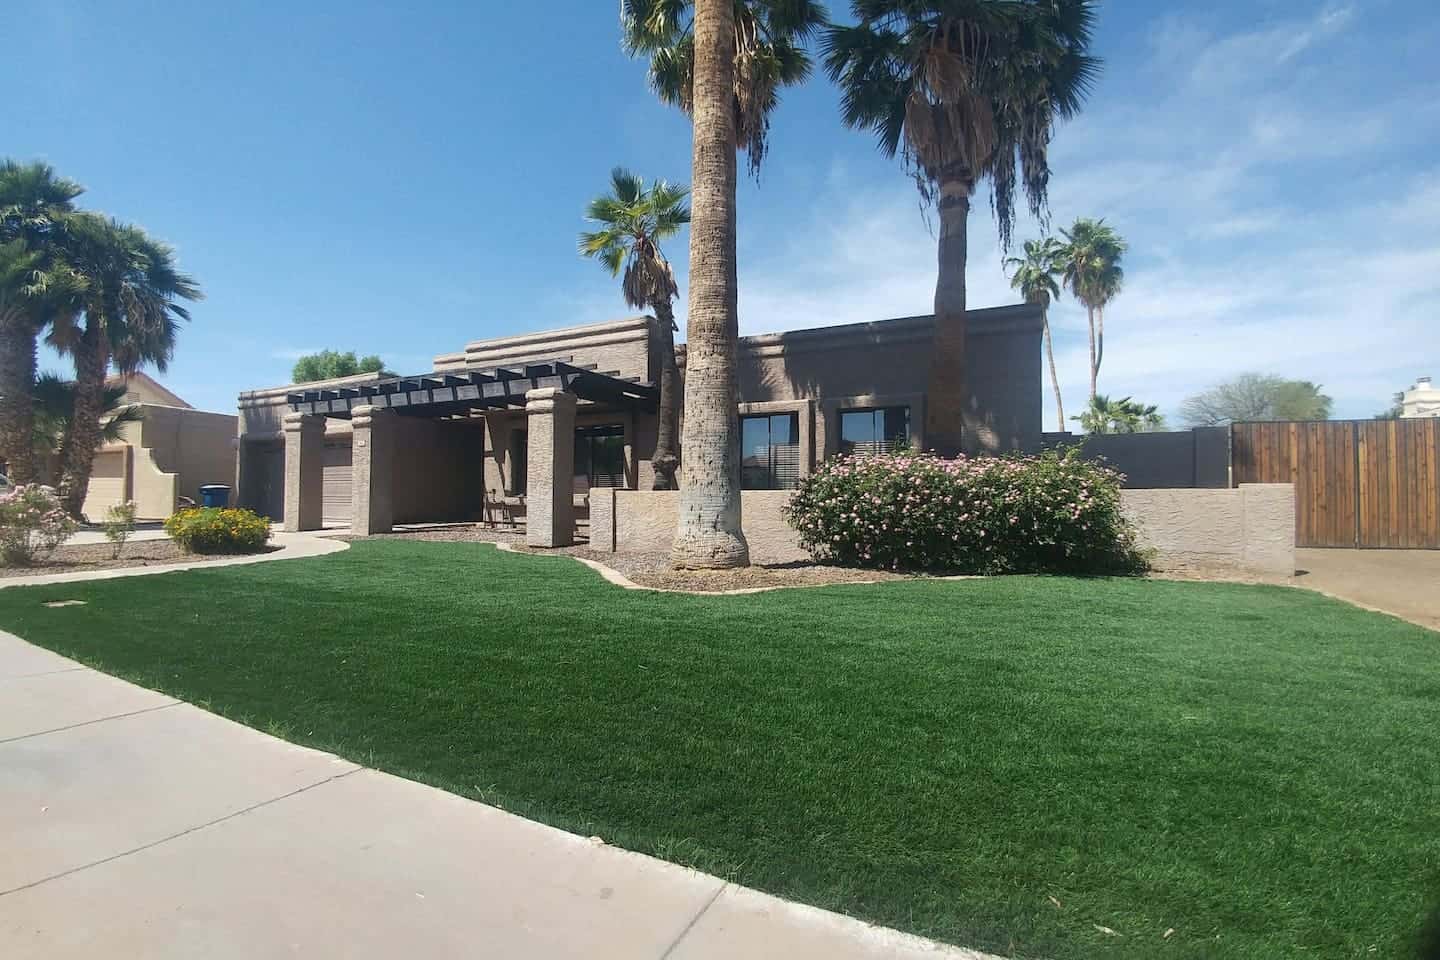 Image of Airbnb rental in Phoenix Arizona